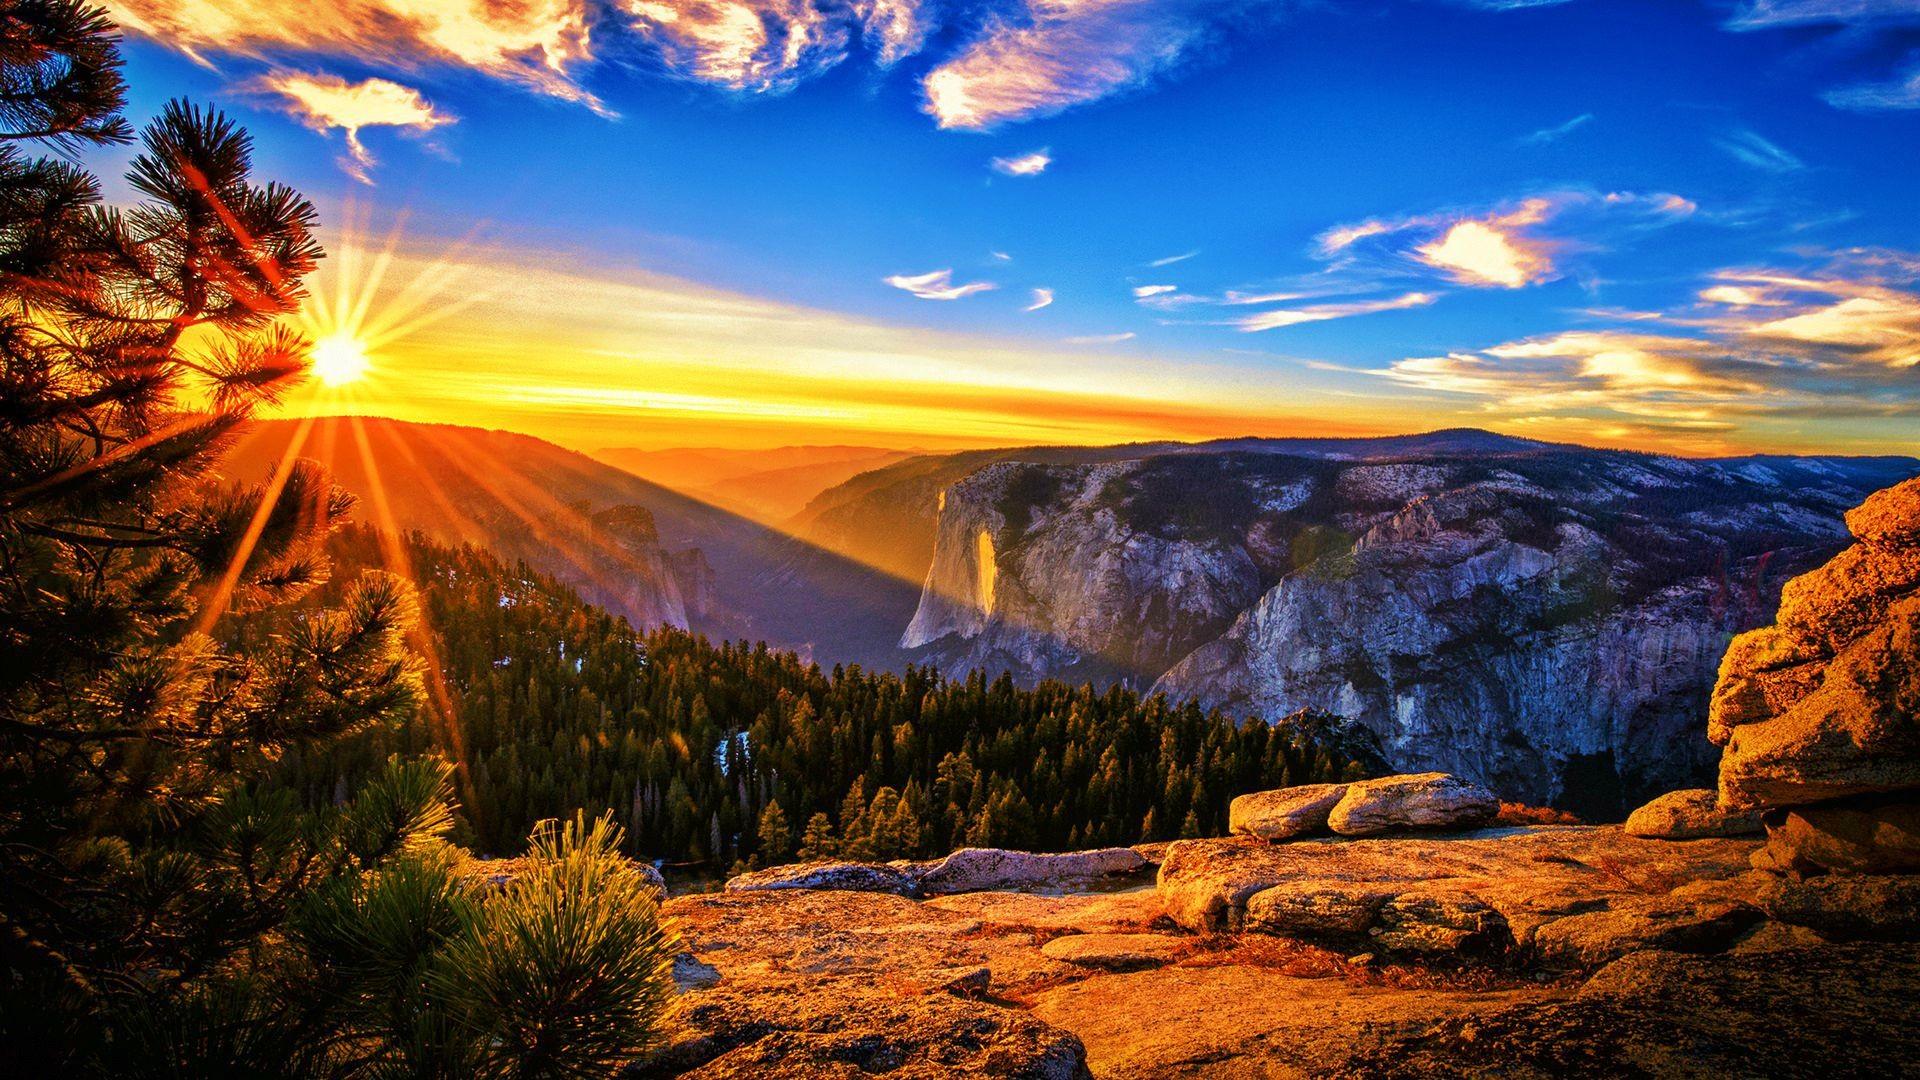 Landscape Sunset Mountain HD Wallpaper, Background Image